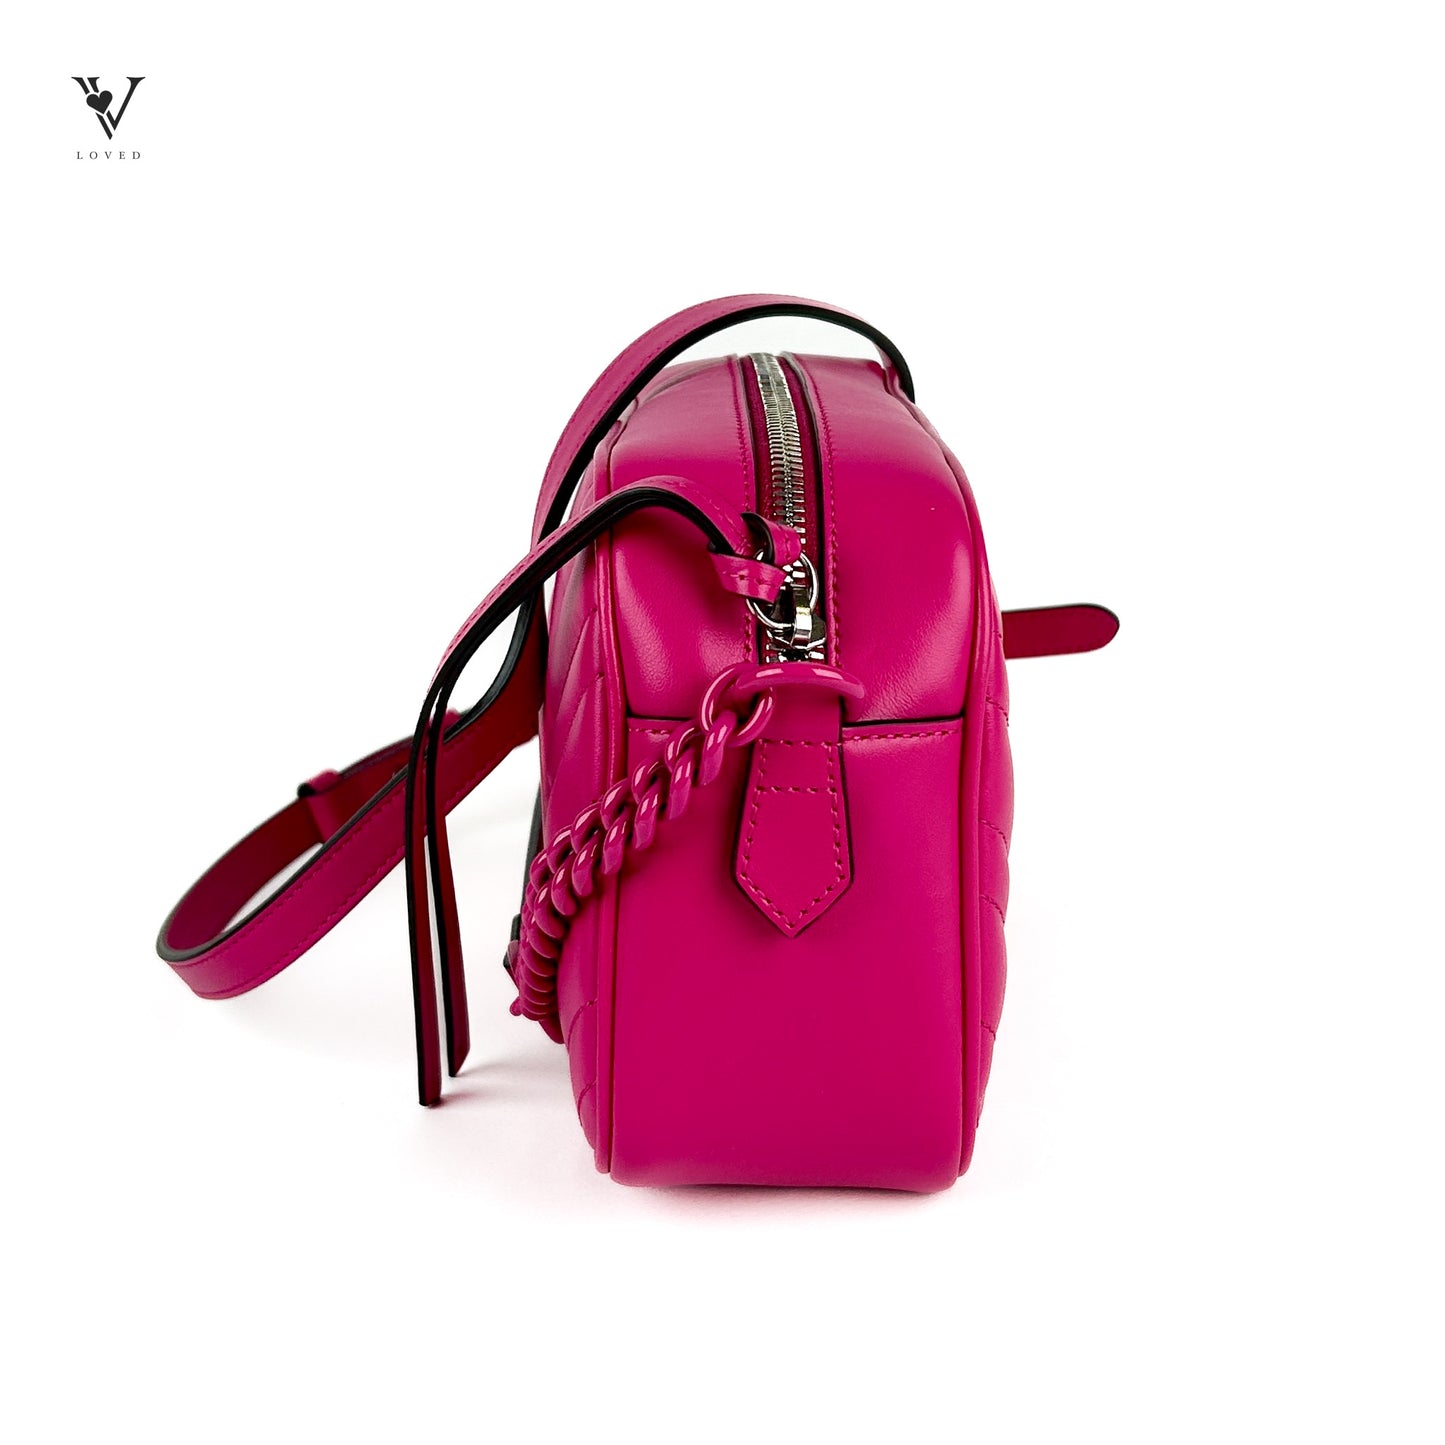 GG Marmont Matelassé Crossbody Bag  in Hot Pink Calfskin Leather